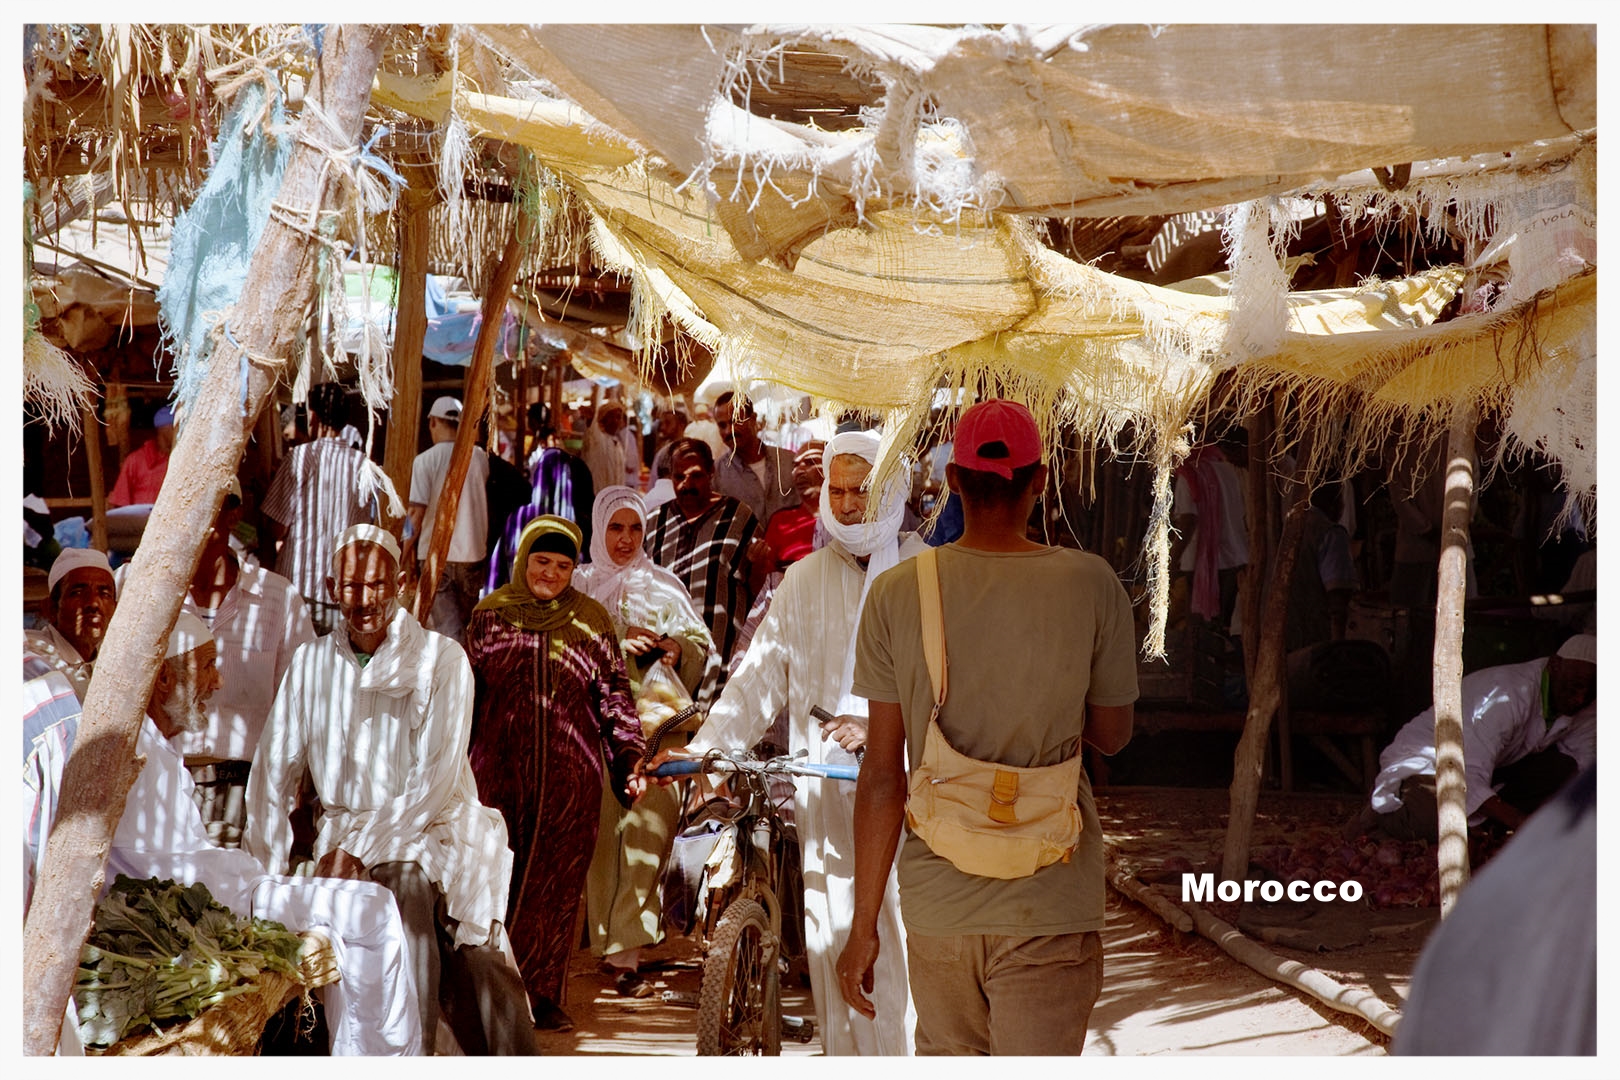    Click hereto view Morocco   